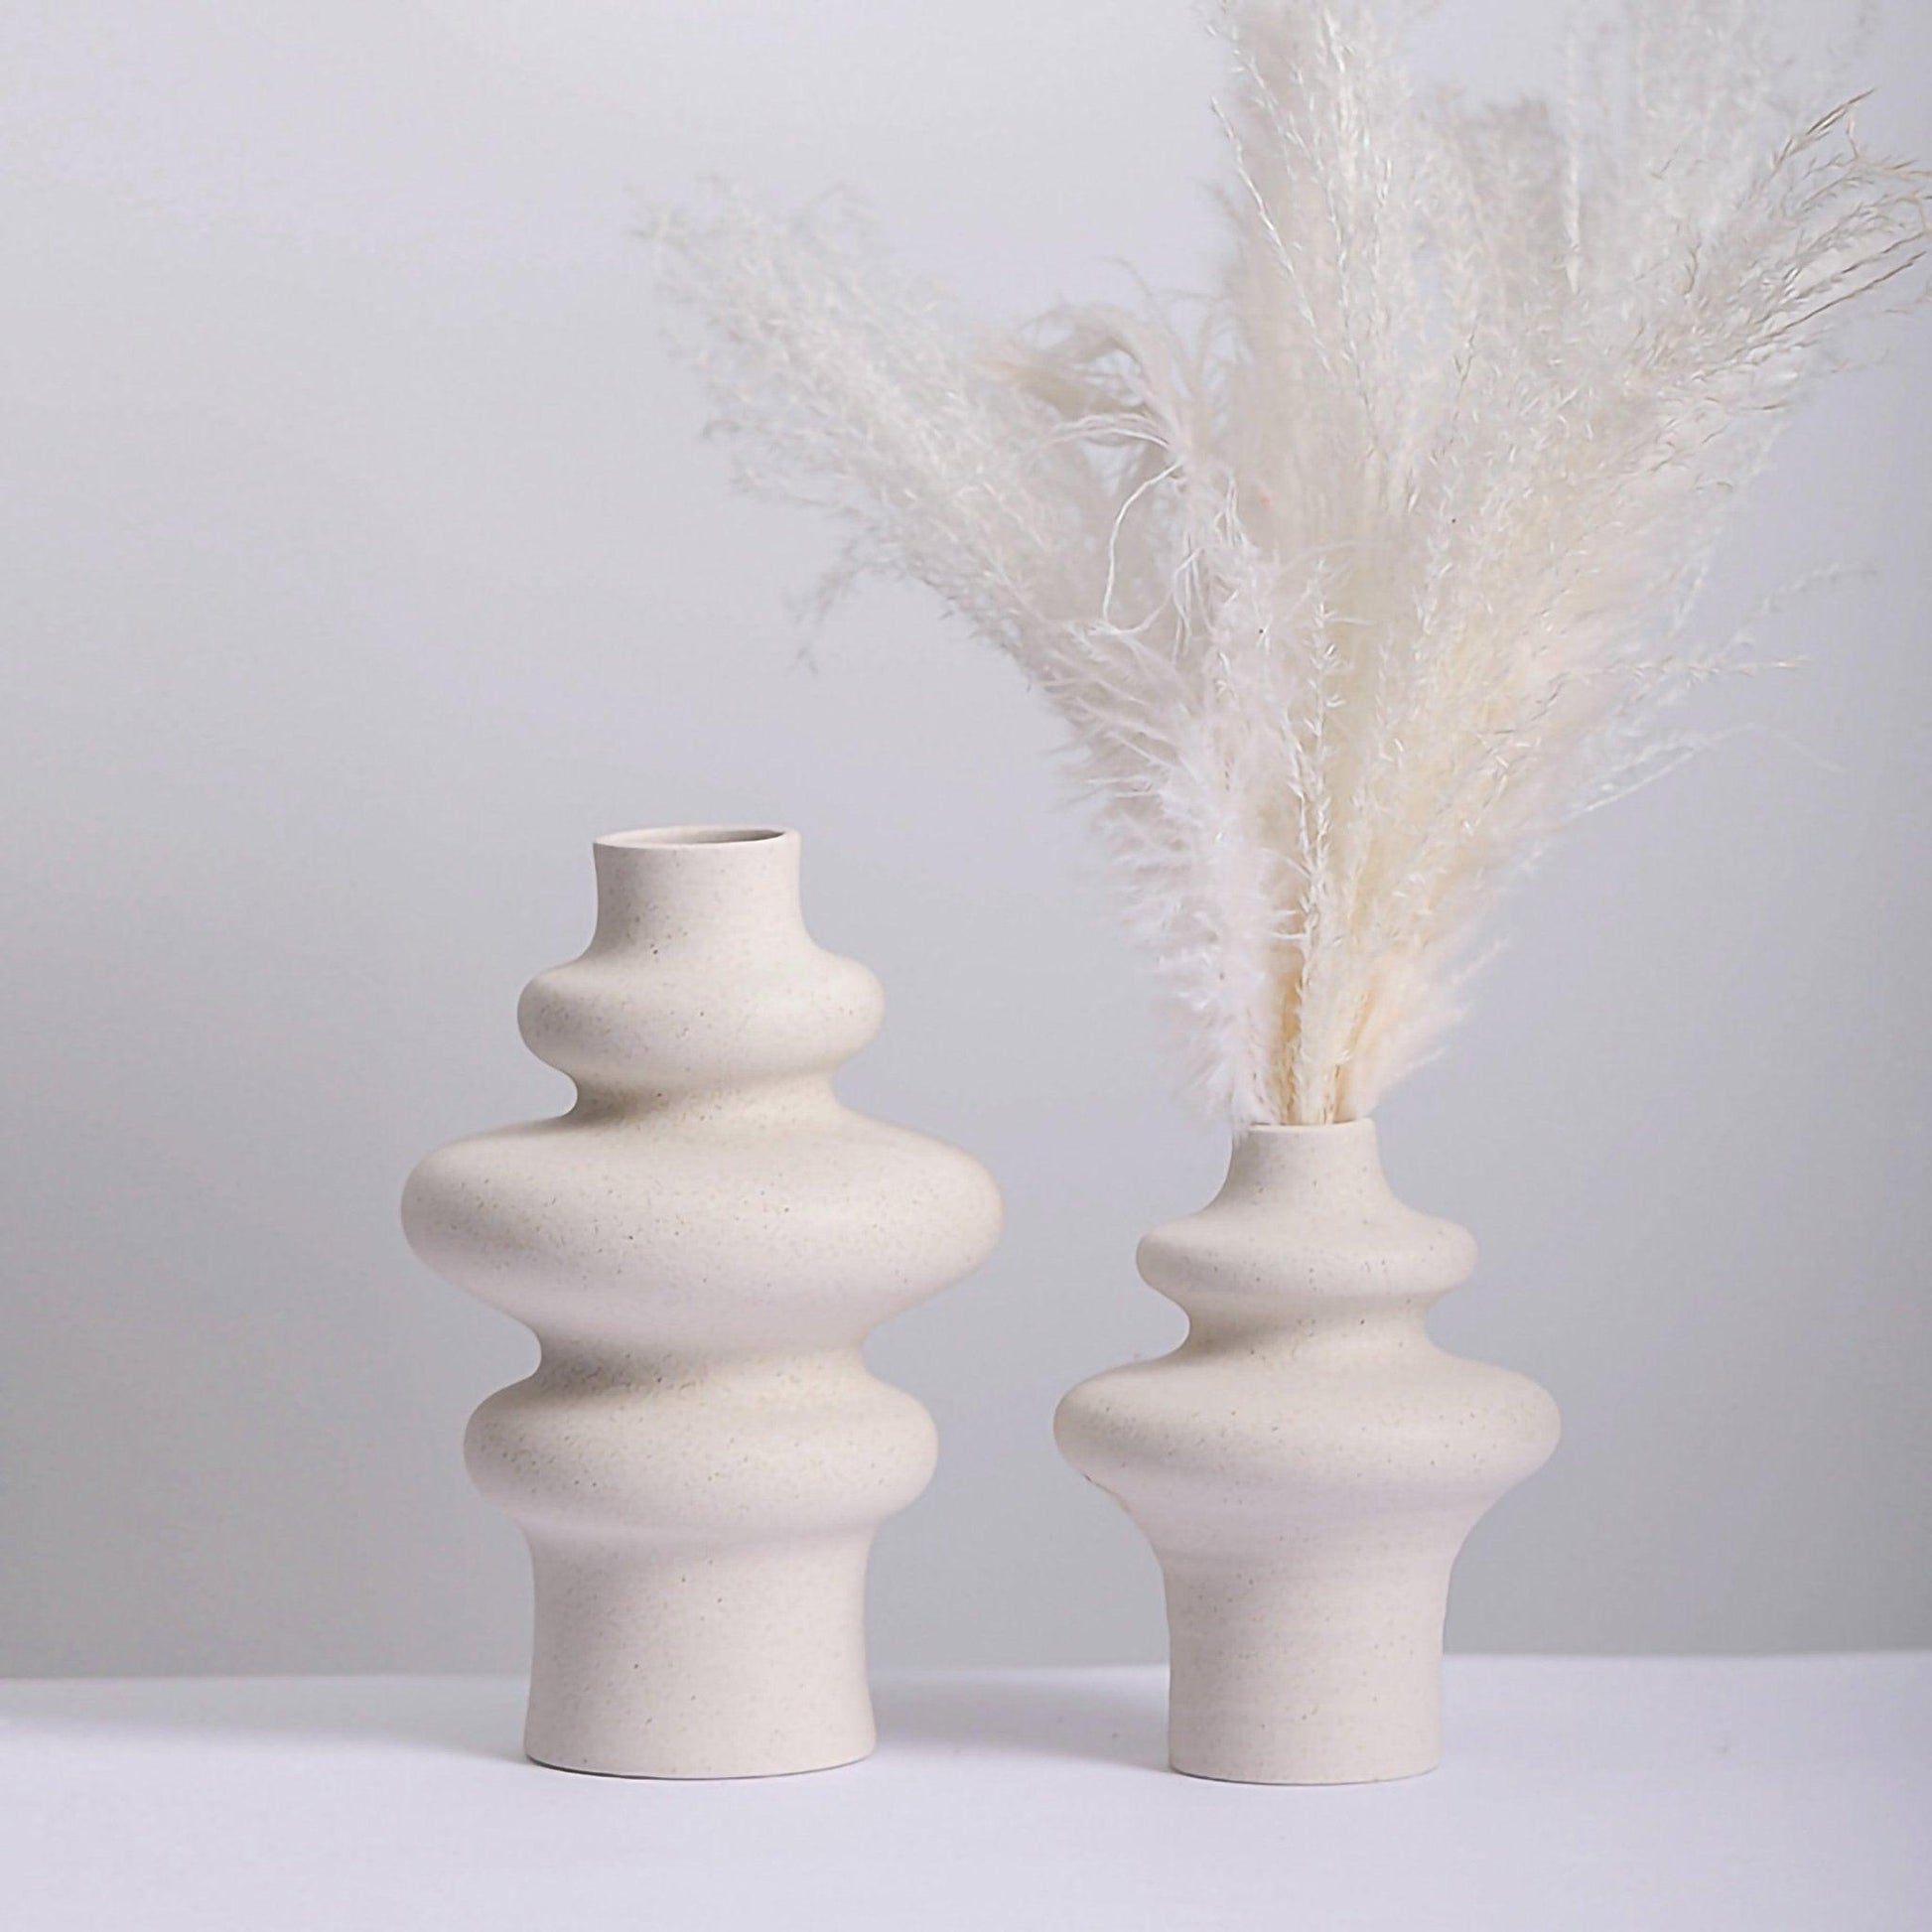 Beige Nordic Ceramics Dried Flower Vase │ Pampas Grass Pot Set│ Home Ornaments Decorations Gifts - Besontique